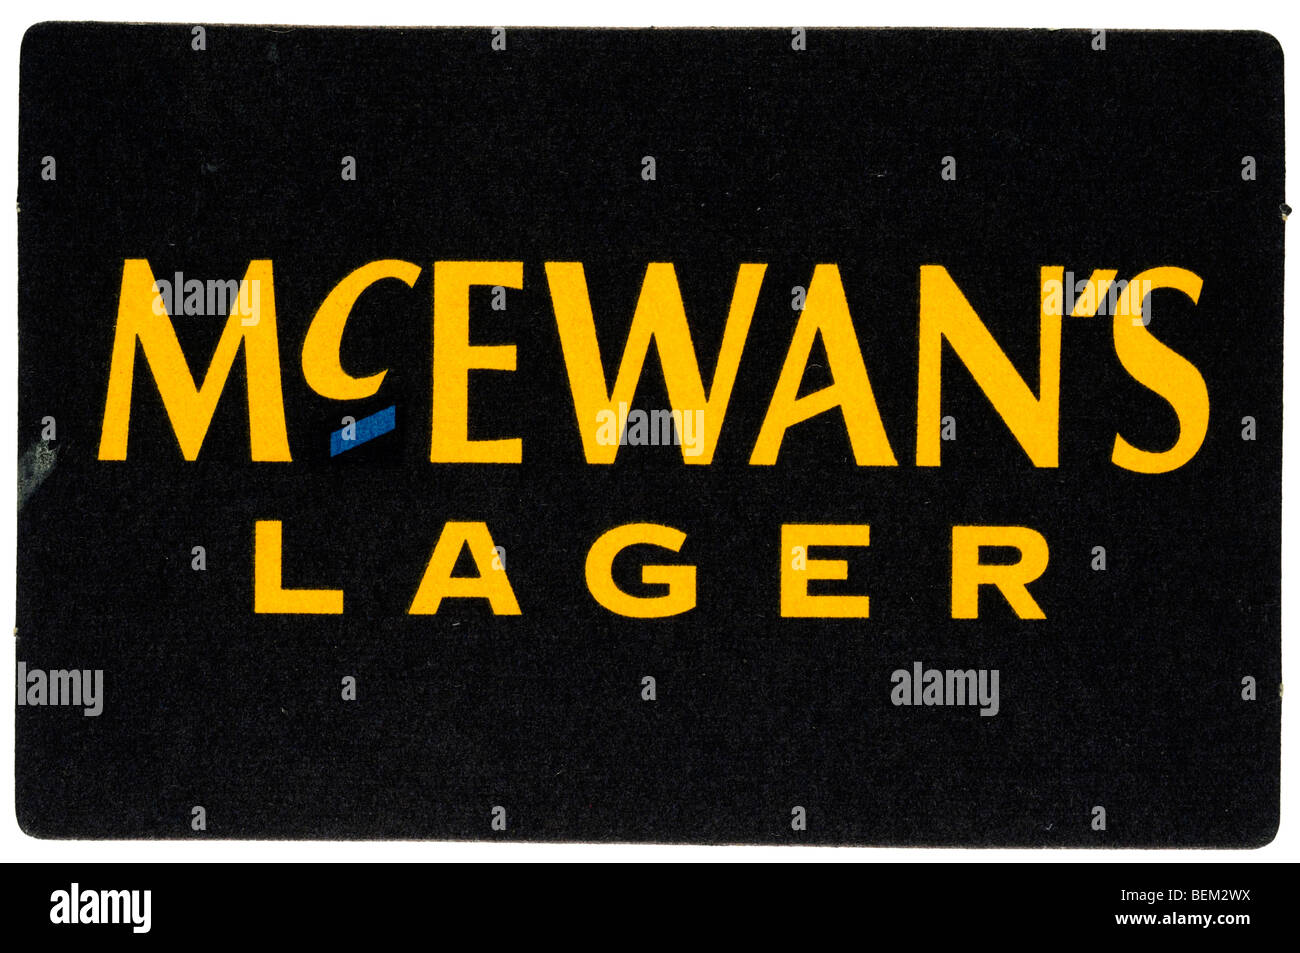 mc ewans lager Stock Photo